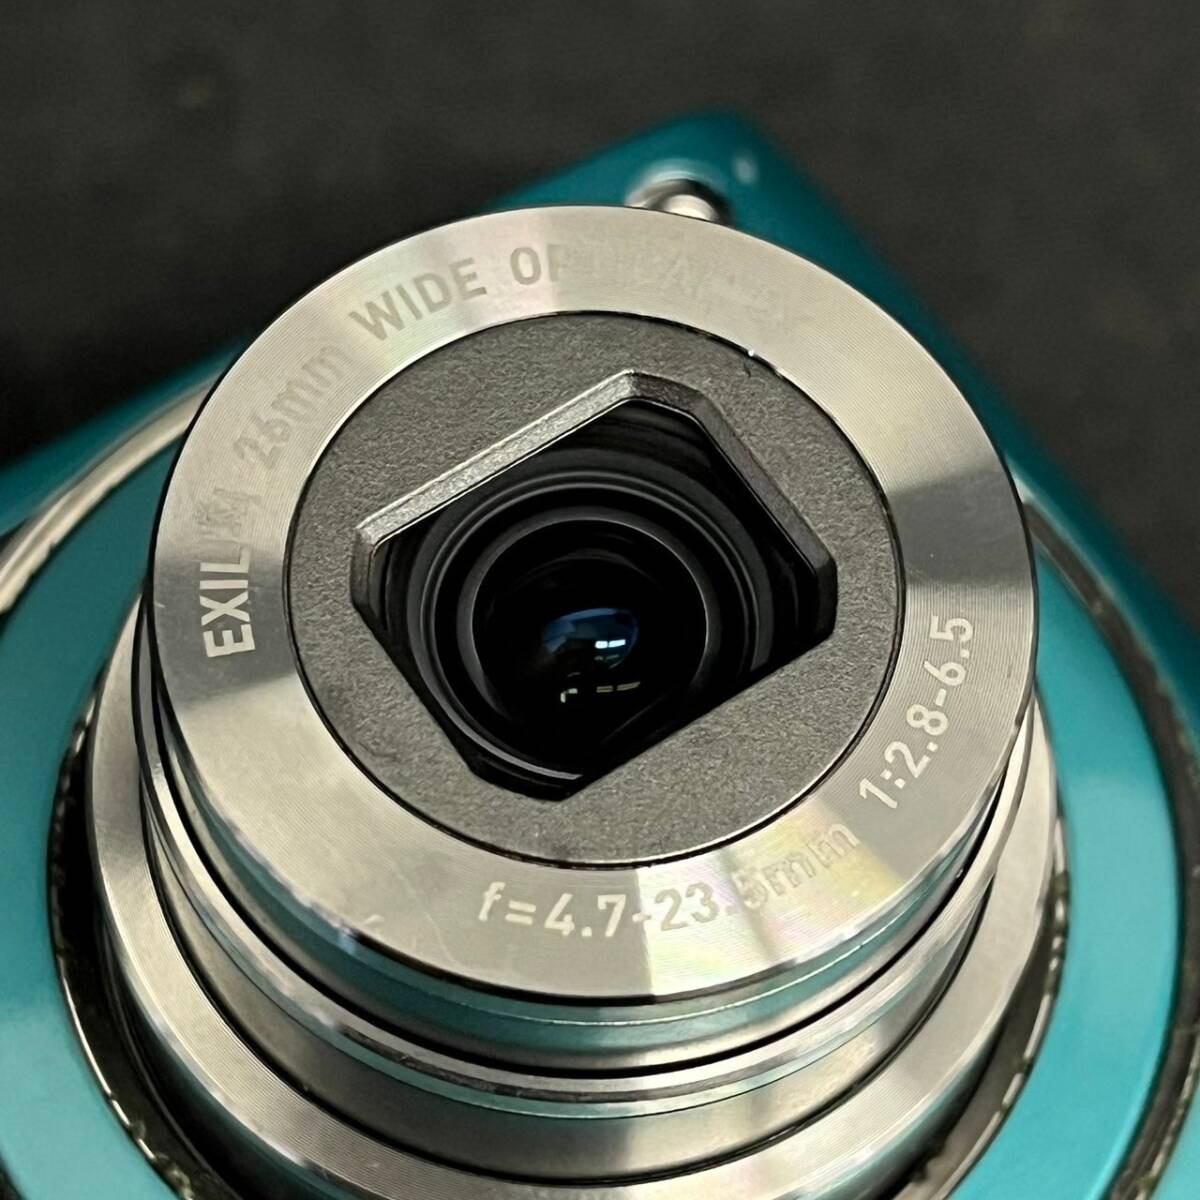 BDd198R 60 CASIO EXILIM EX-Z2300 14.1MEGA PIXELS エクシリム 26mm WIDE OPTICAL 5x f=4.7-23.5mm 1:2.8-6.5 ブルー デジタルカメラの画像8